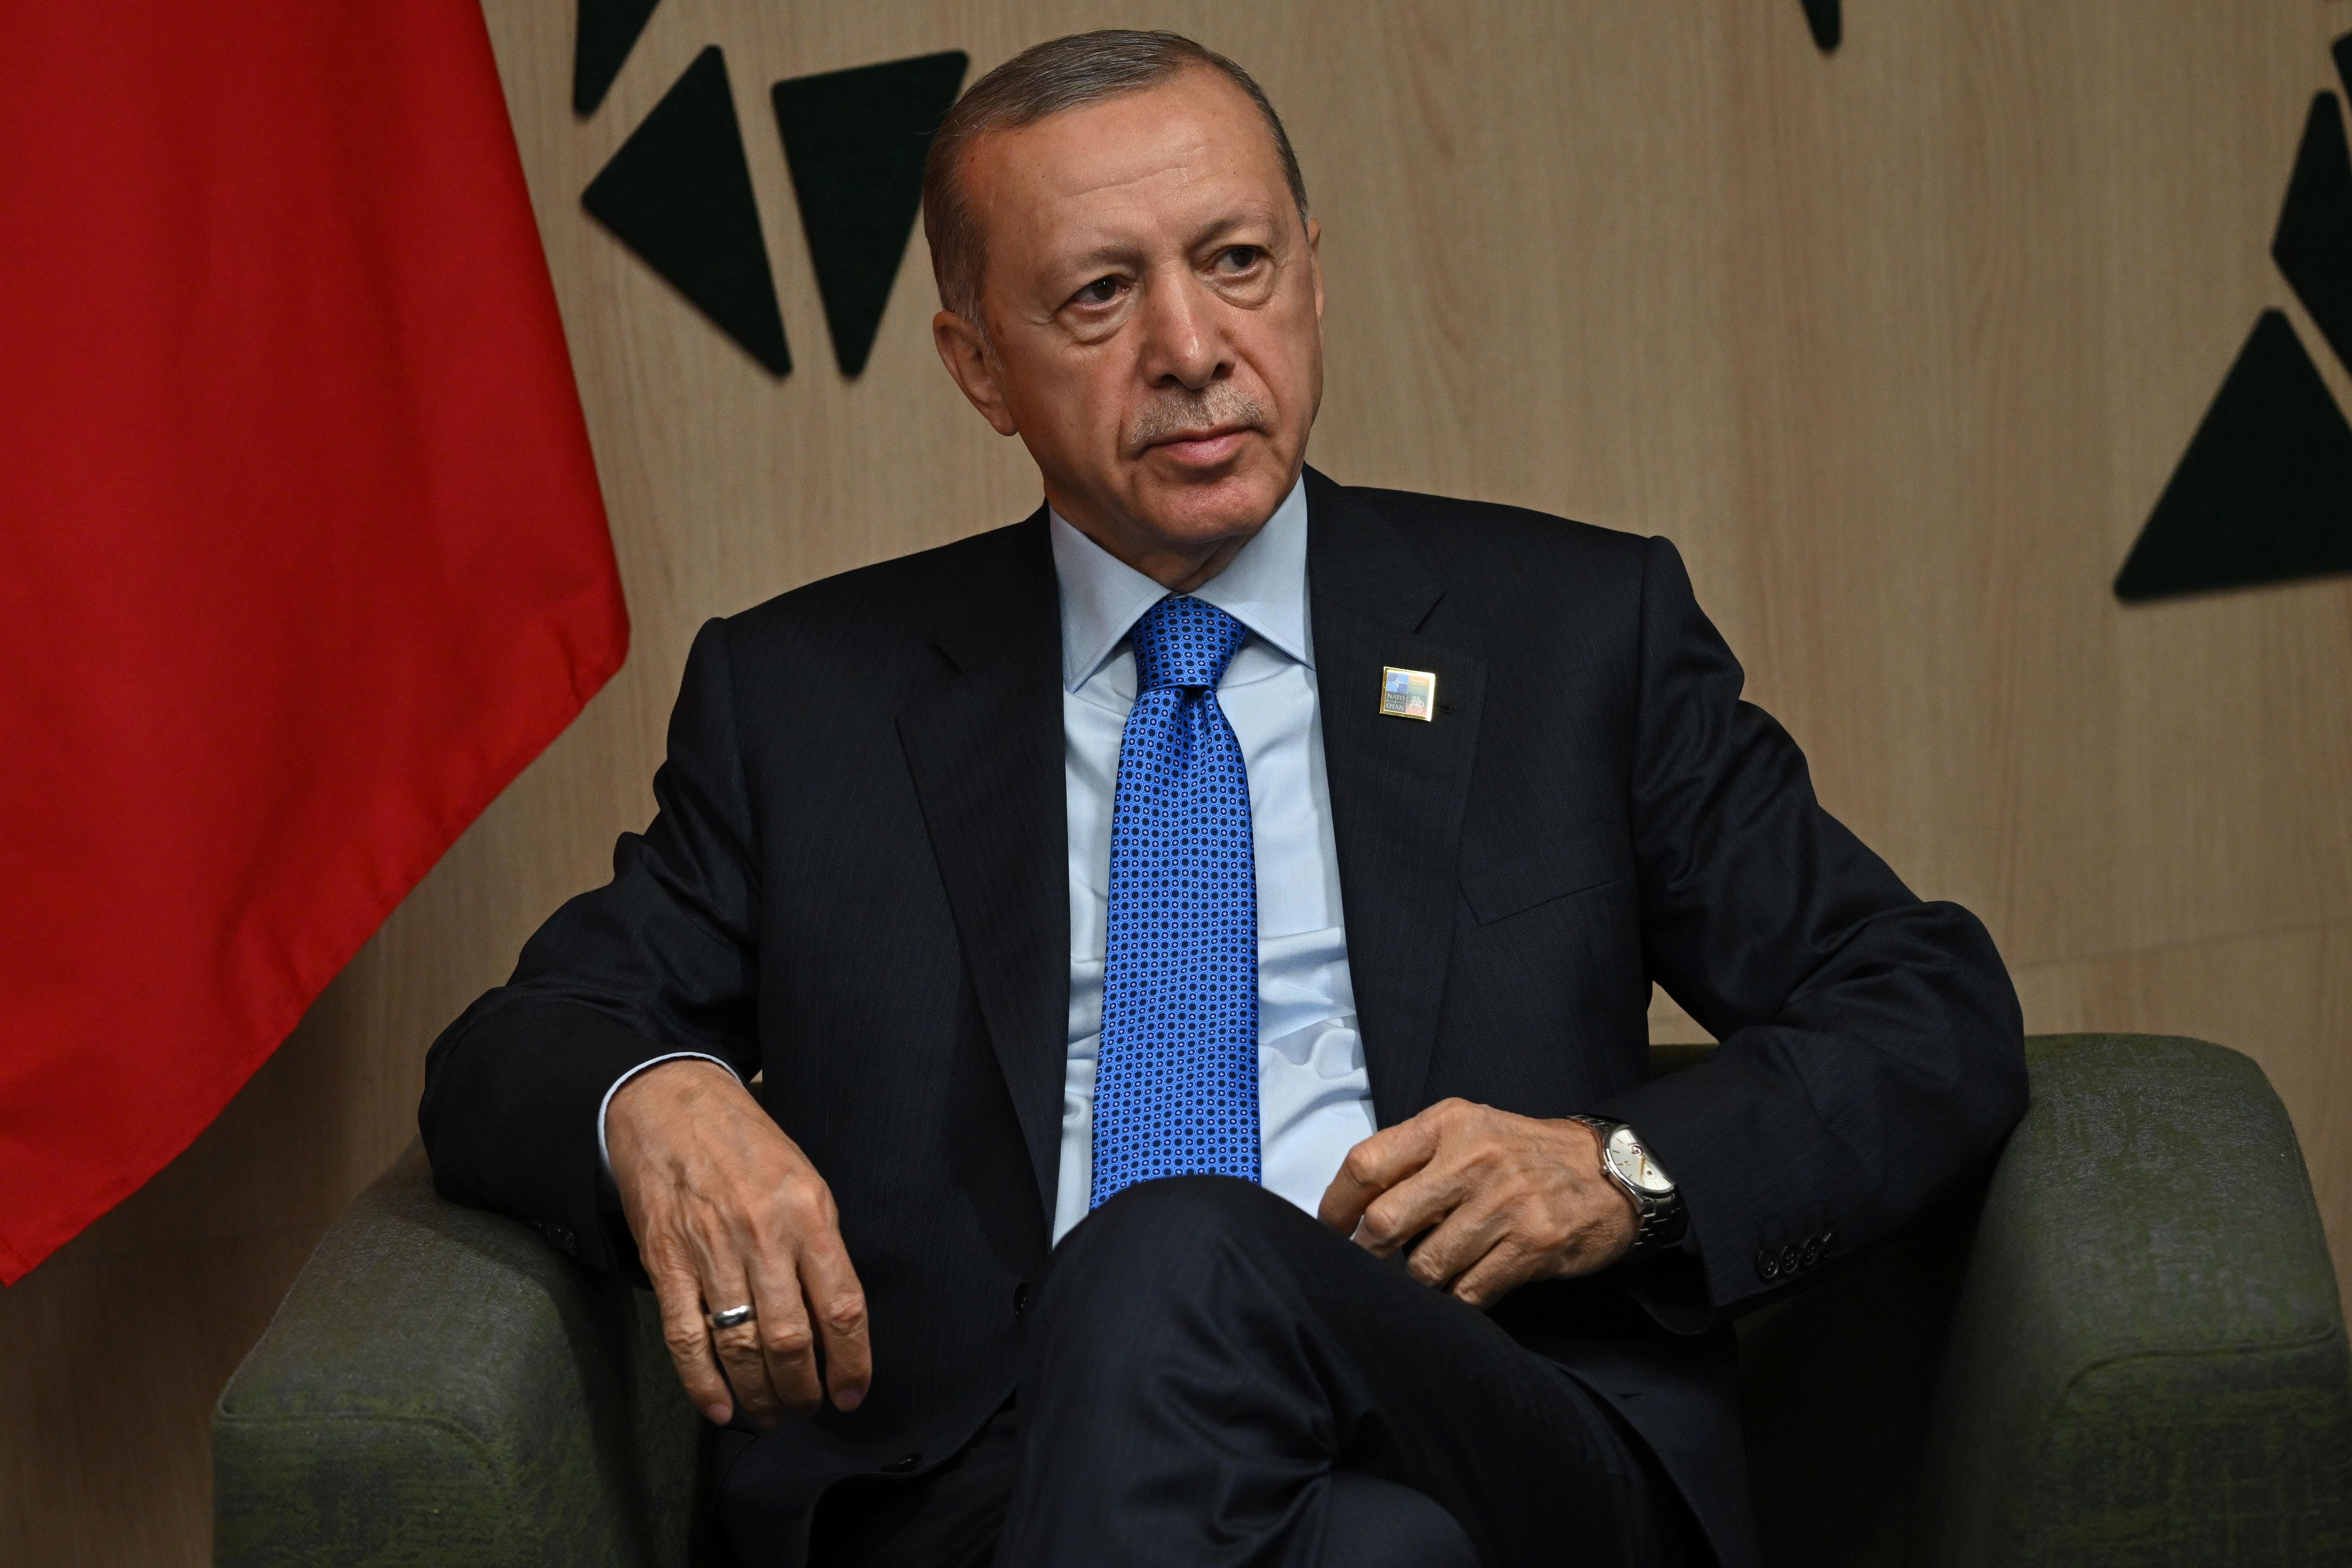 Turkey’s President Recep Tayyip Erdogan during the Nasto summit in Vilnius, Lithuania (Paul Ellis/PA)